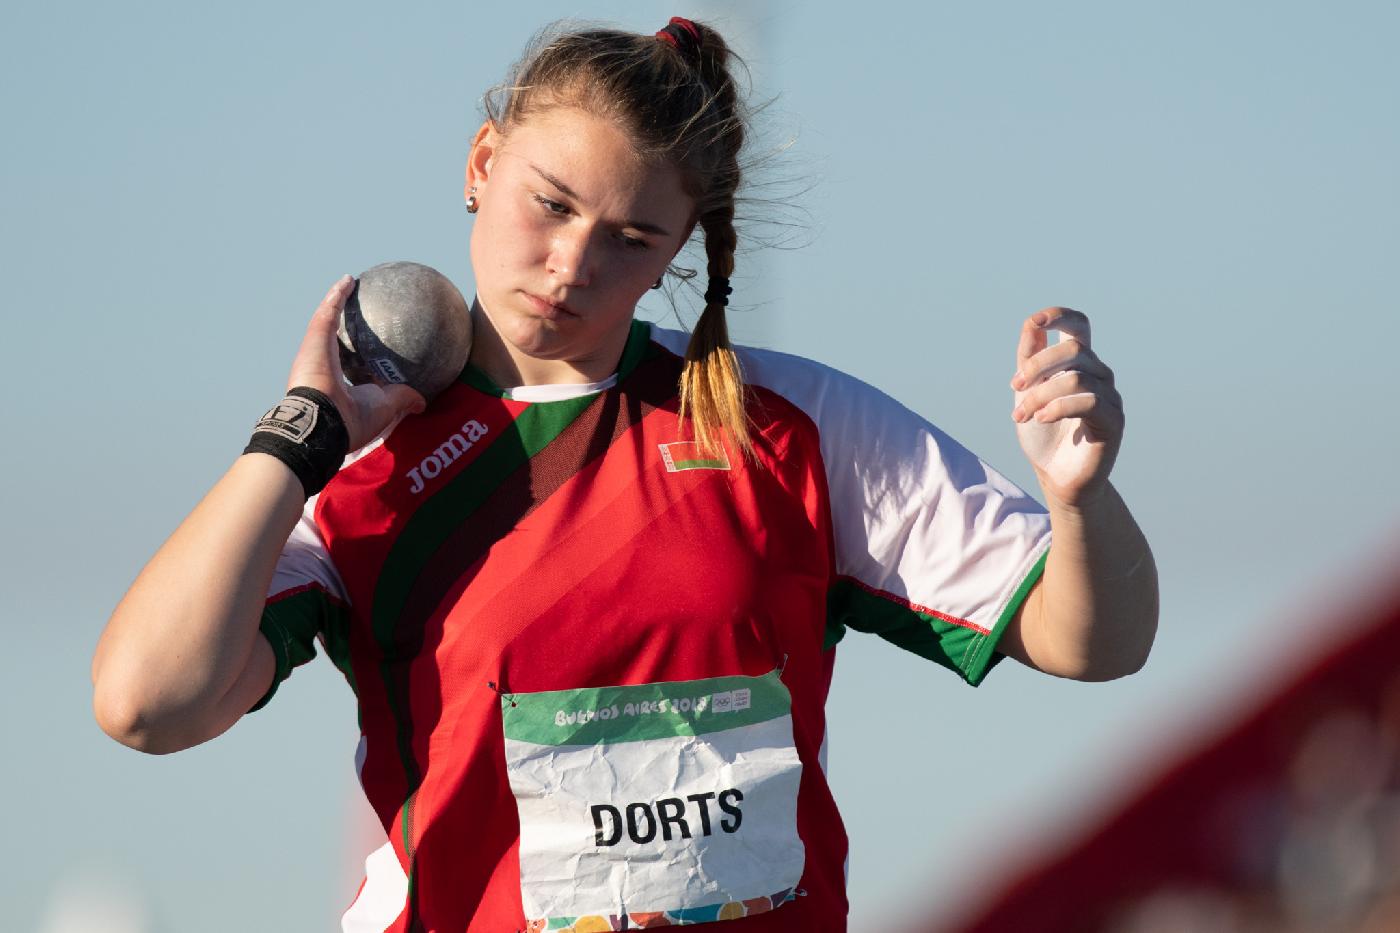 YOG 2018. Yelisaveta Dorts won silver medal in shot put